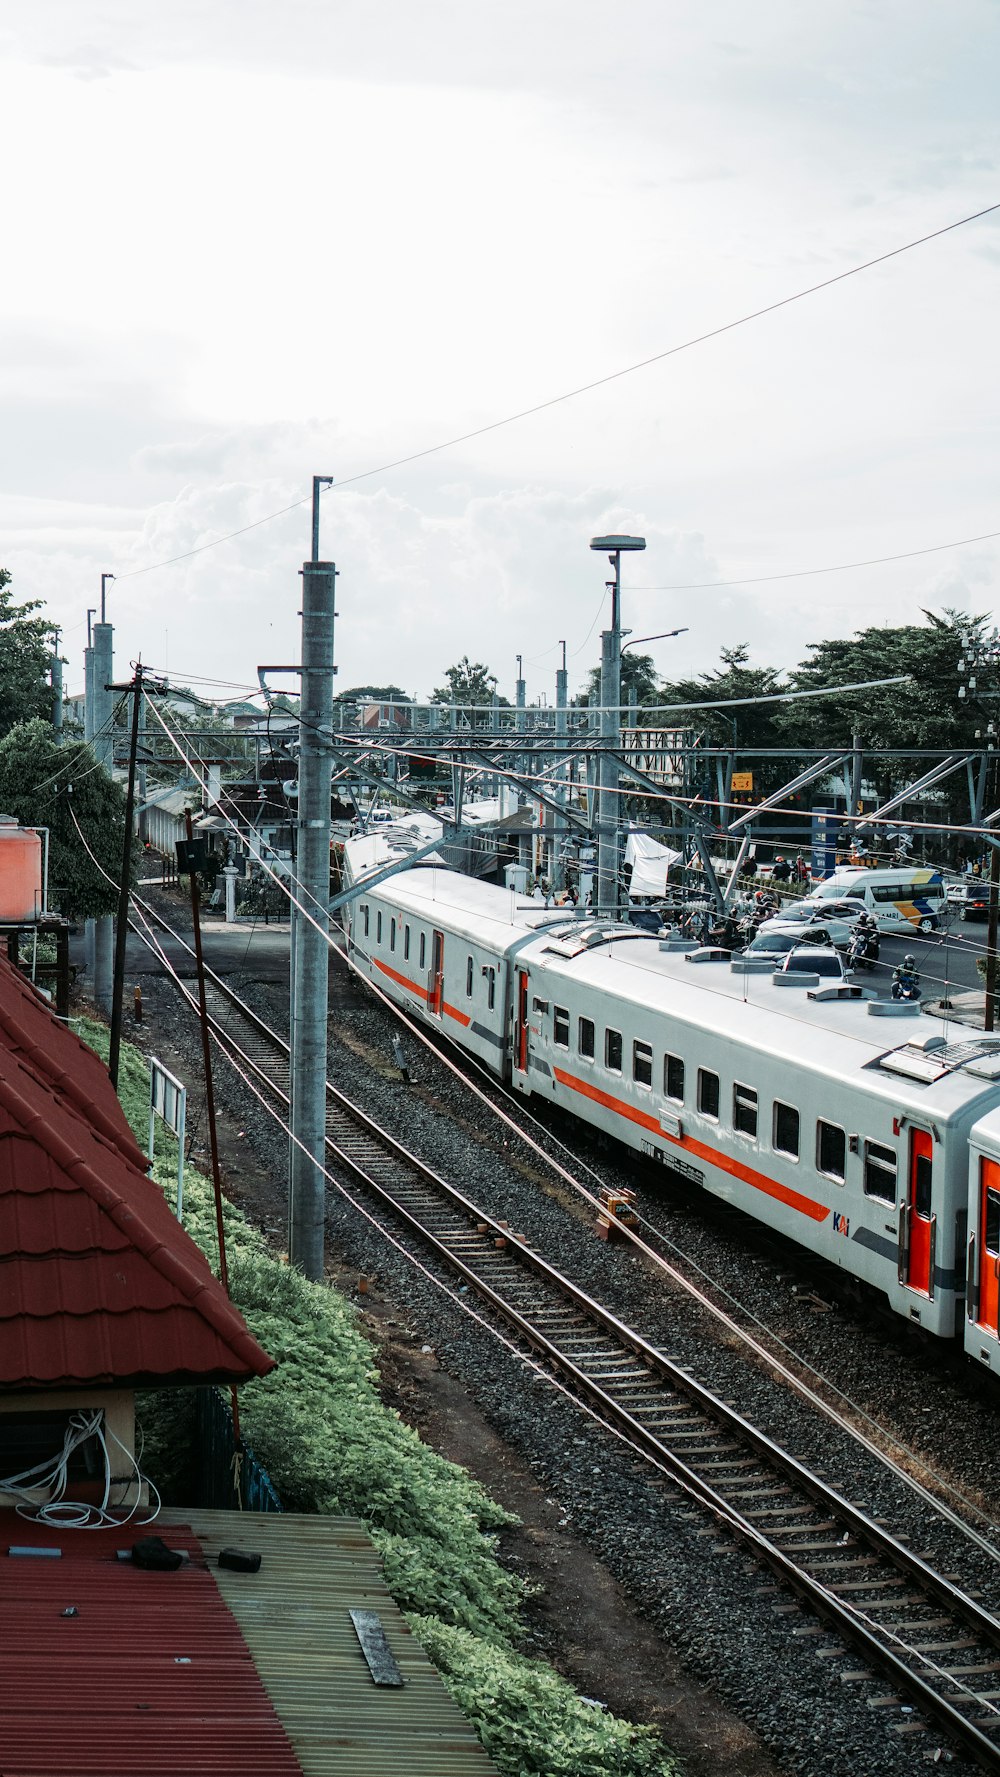 a train on a train track next to a train station